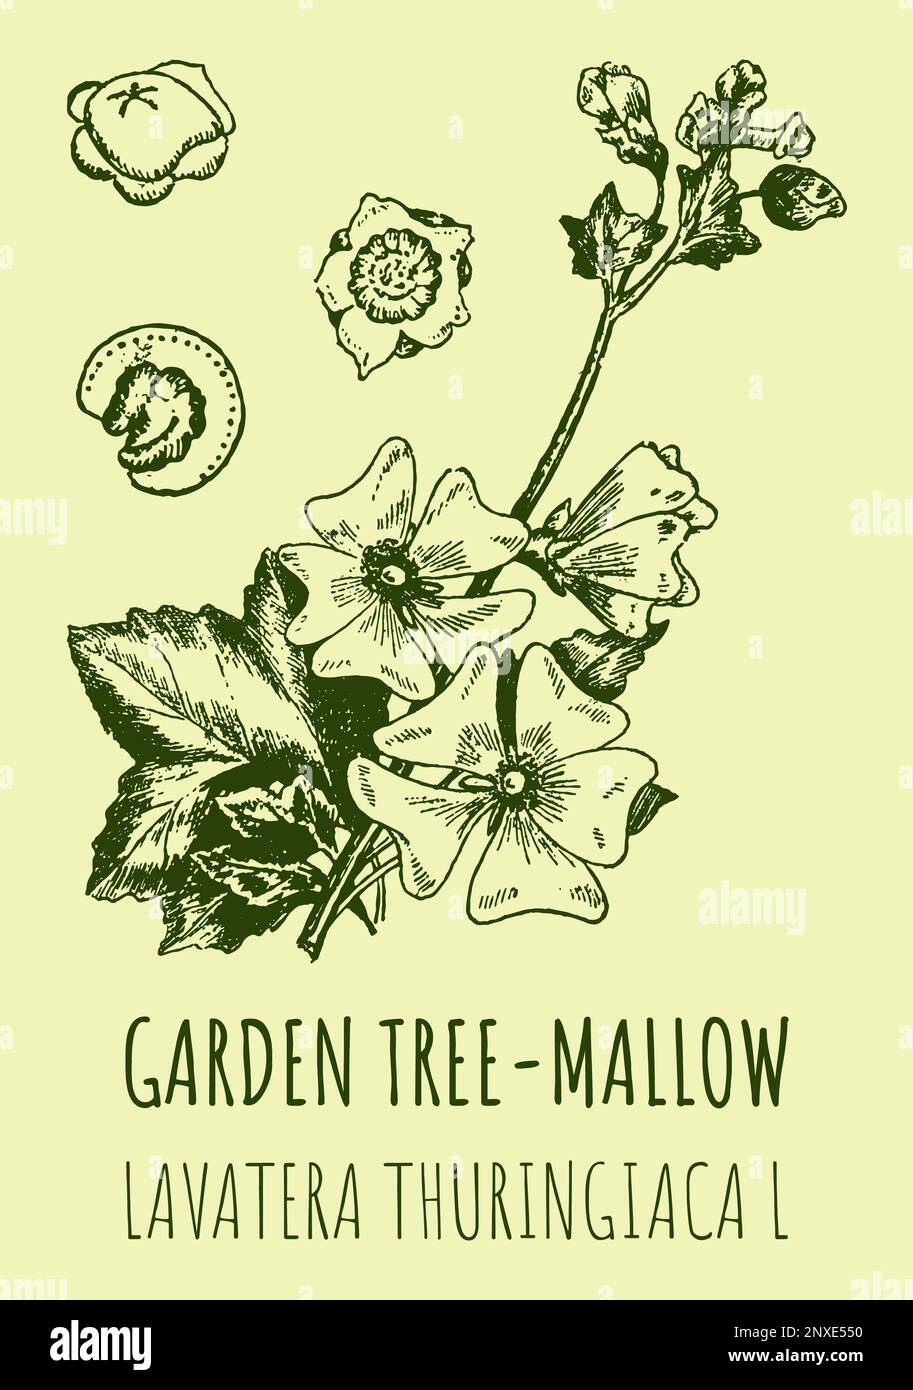 Drawings of Garden tree-mallow. Hand drawn illustration. Latin name LAVATERA THURINGIACA L. Stock Photo